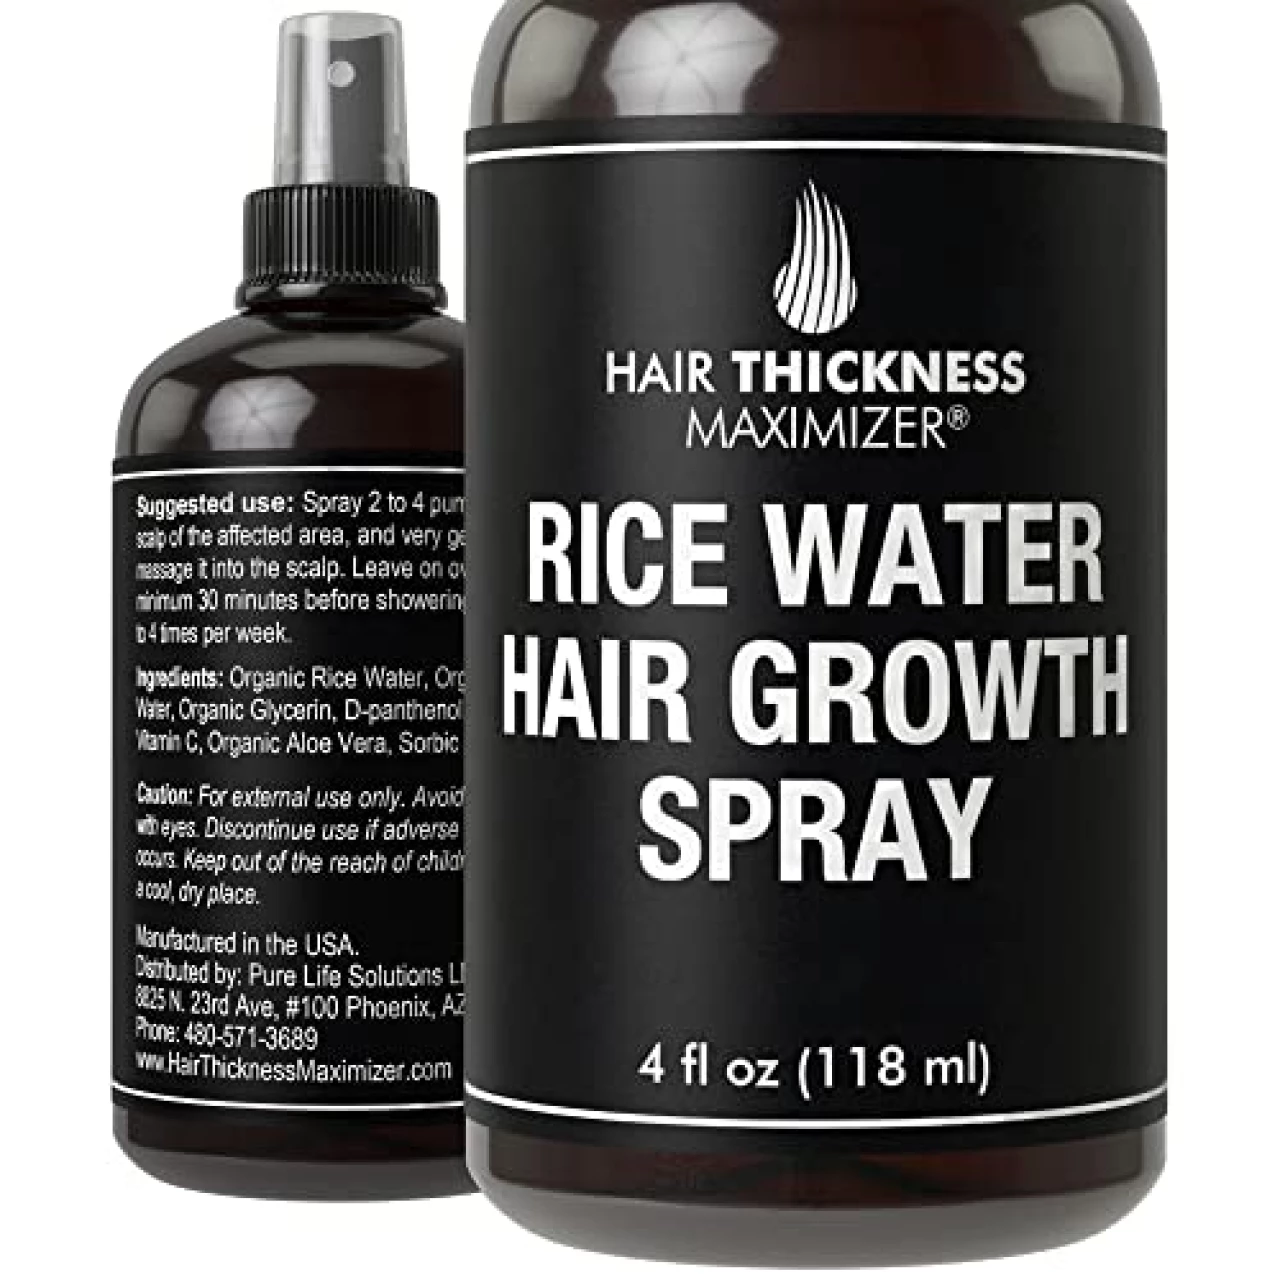 Rice Water For Hair Growth Spray. Vegan Hair Thickening Moisturizing, Hydrating Volumizer Sprays For Men, Women - Vitamin B, C, Aloe Vera. Leave In Fermented Mist For Dry, Frizzy, Weak Hair. Unscented